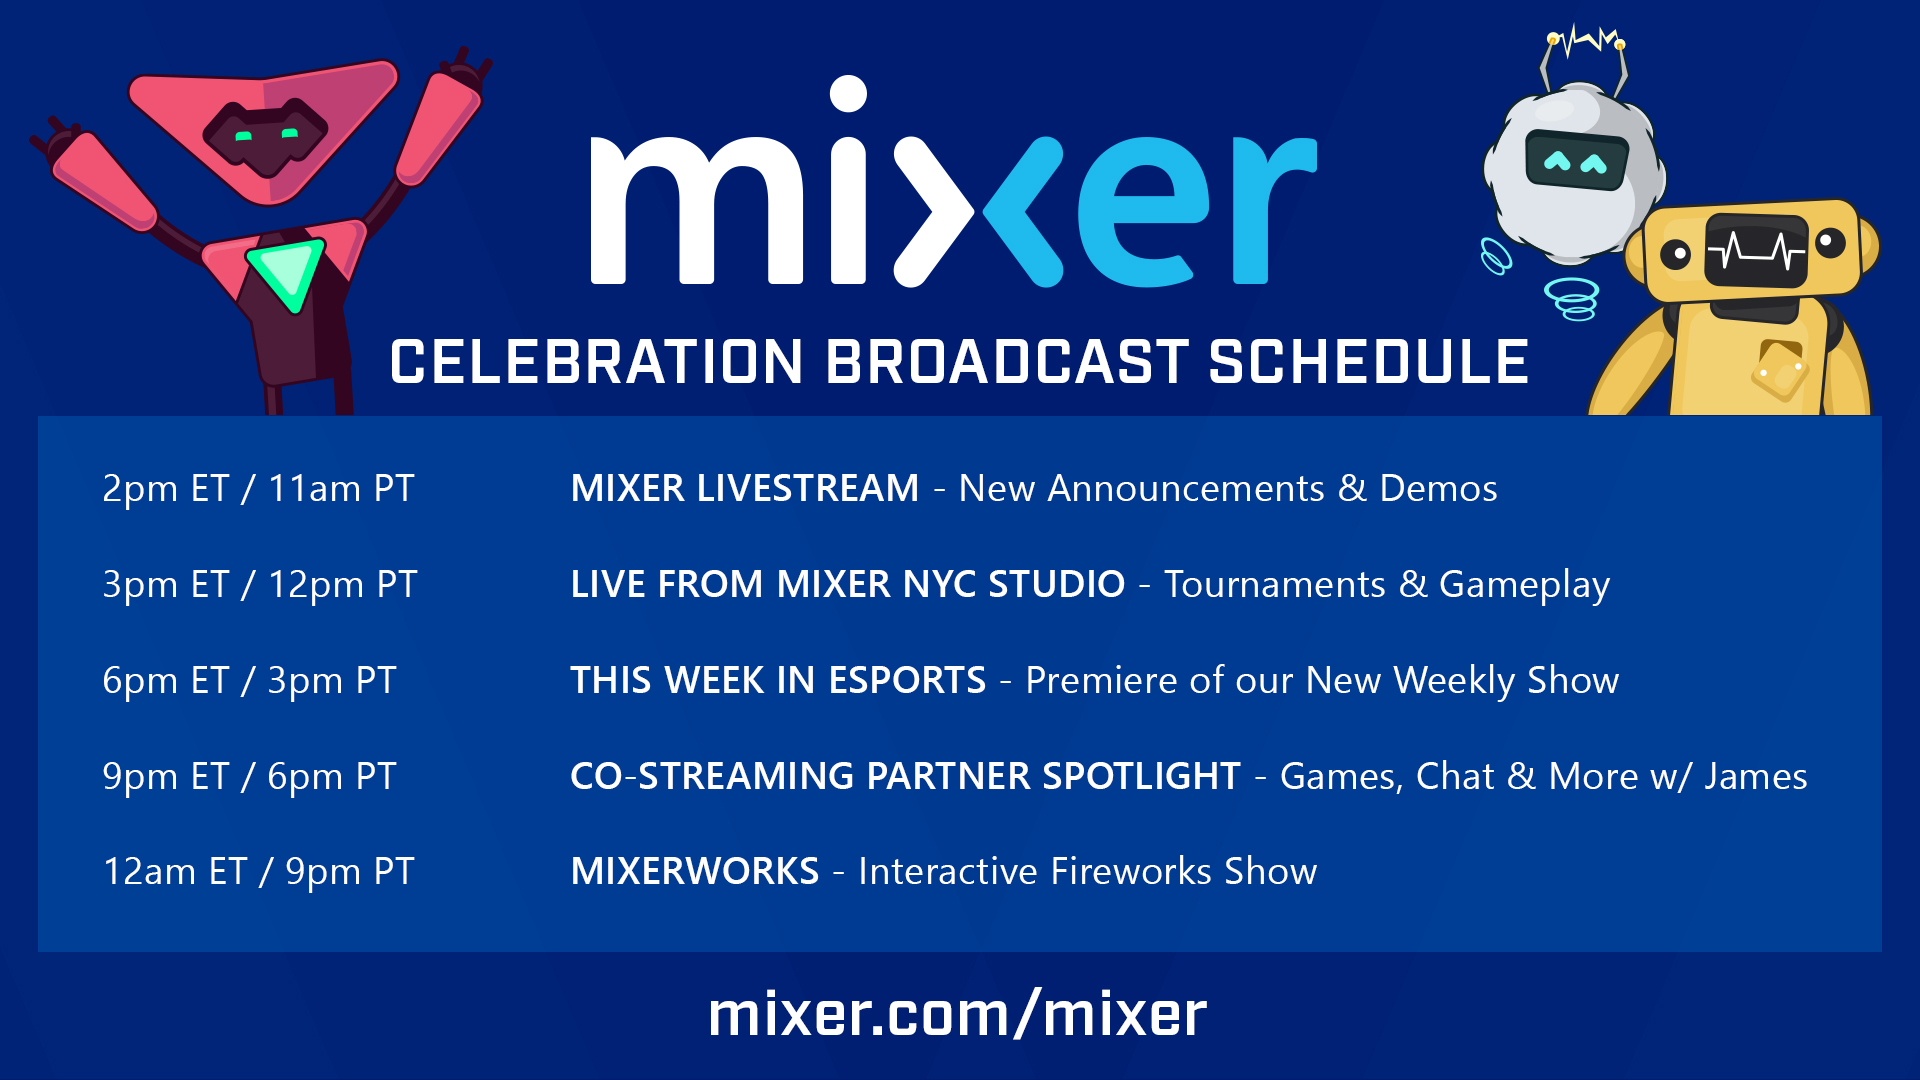 Mixer Celebration Broadcast Schedule Graphic 